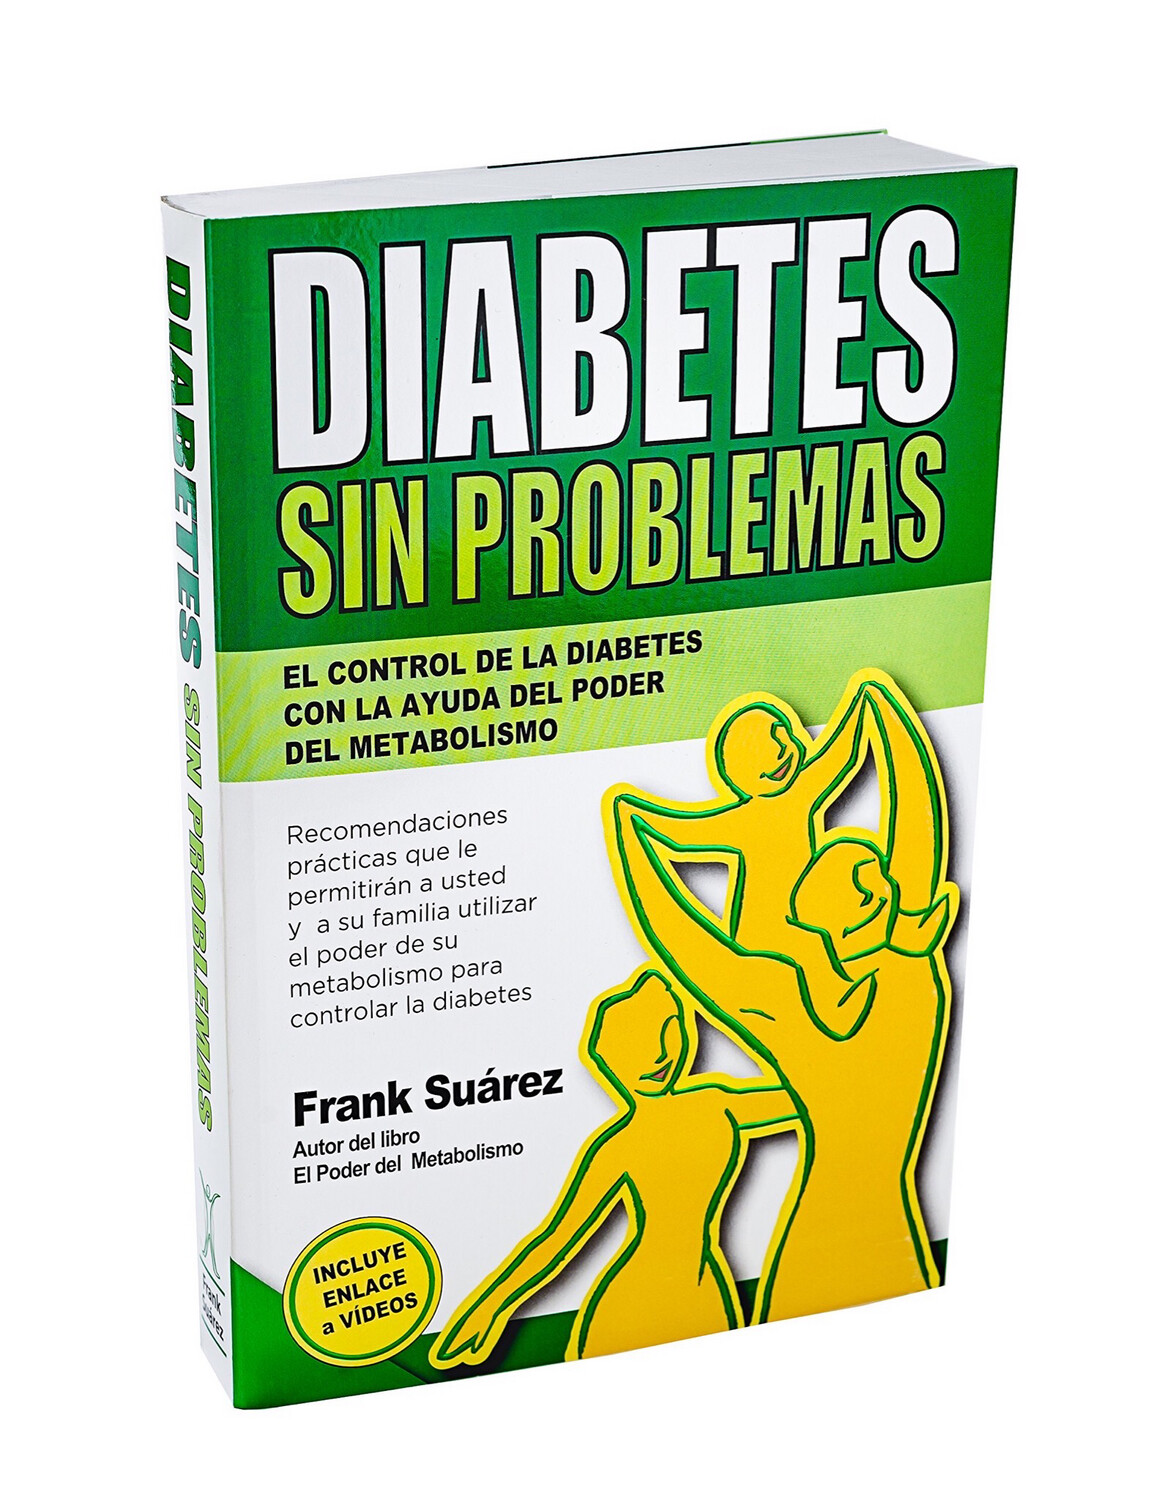 Libro: Diabetes sin problemas de Frank Suarez